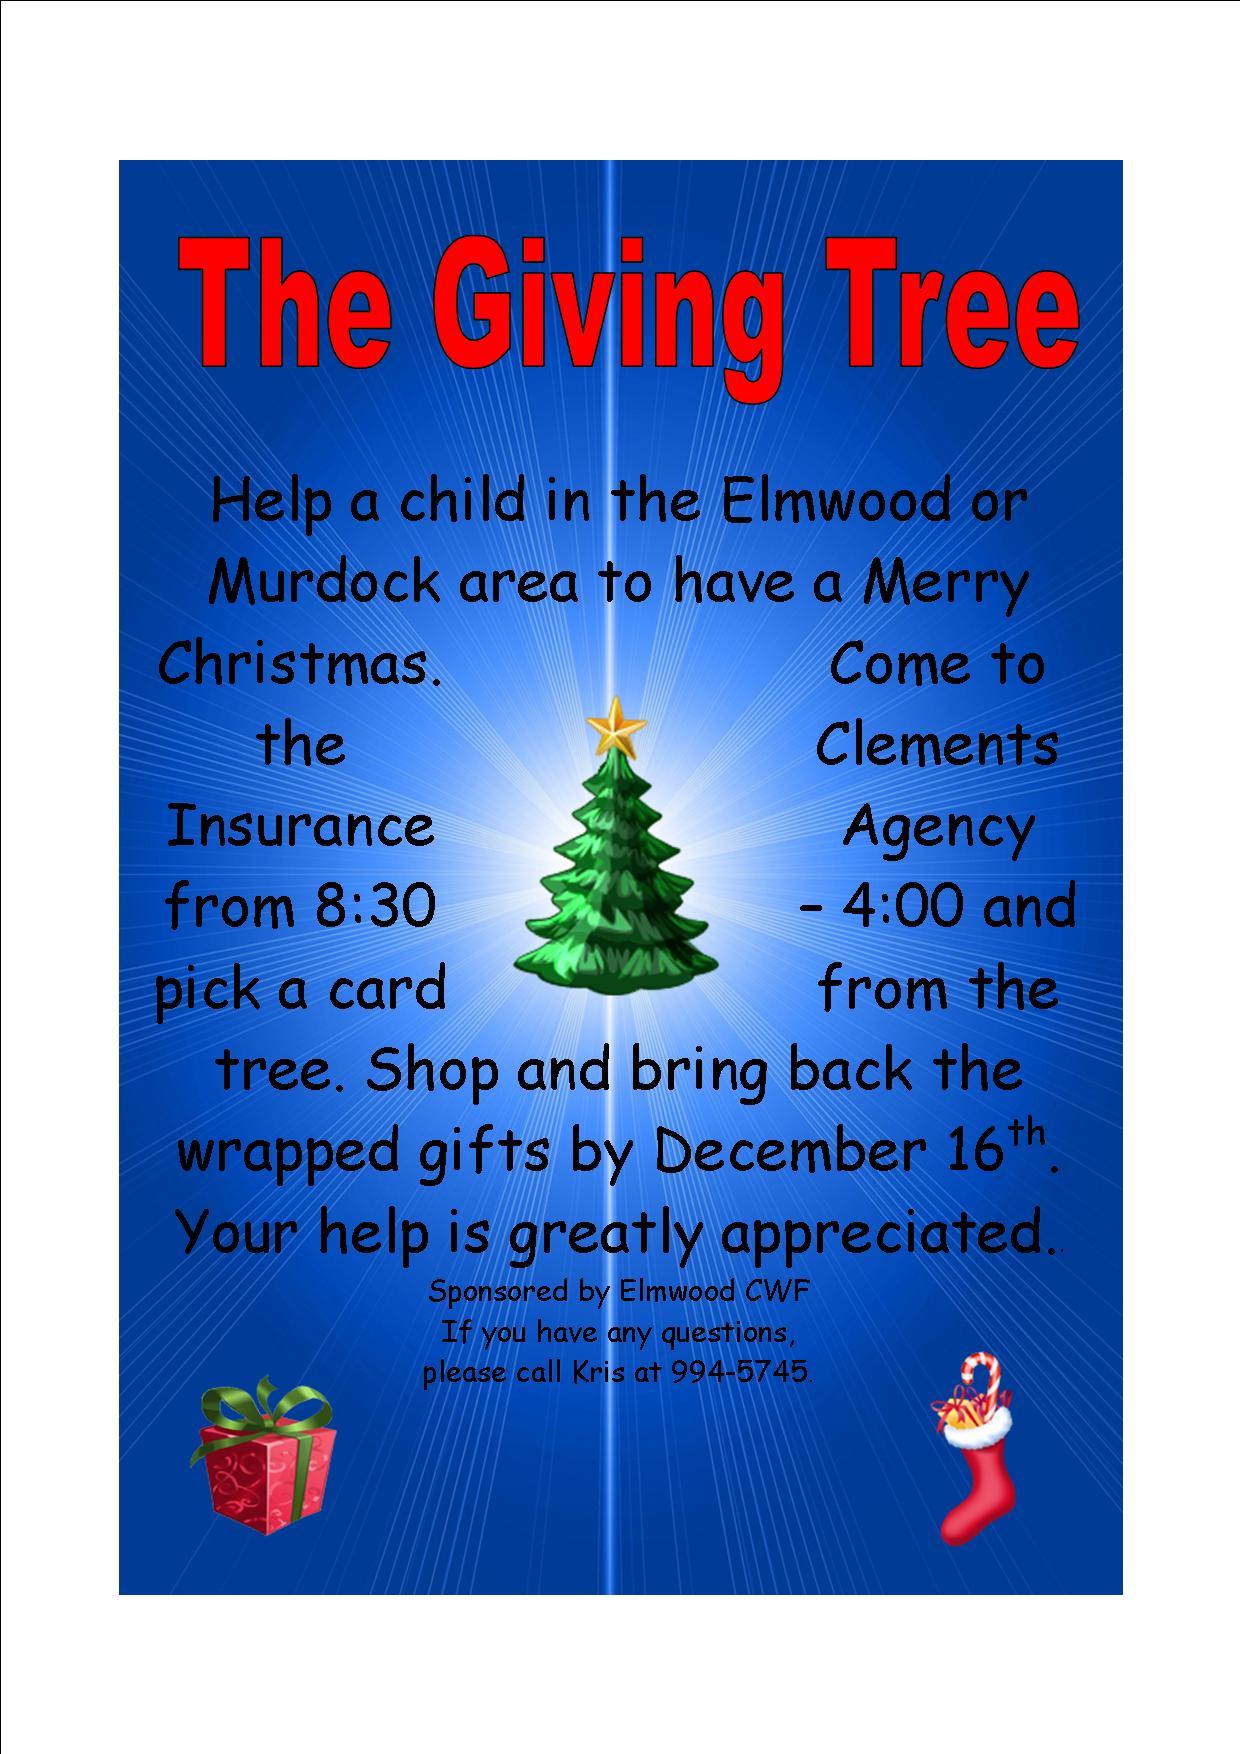 giving_tree